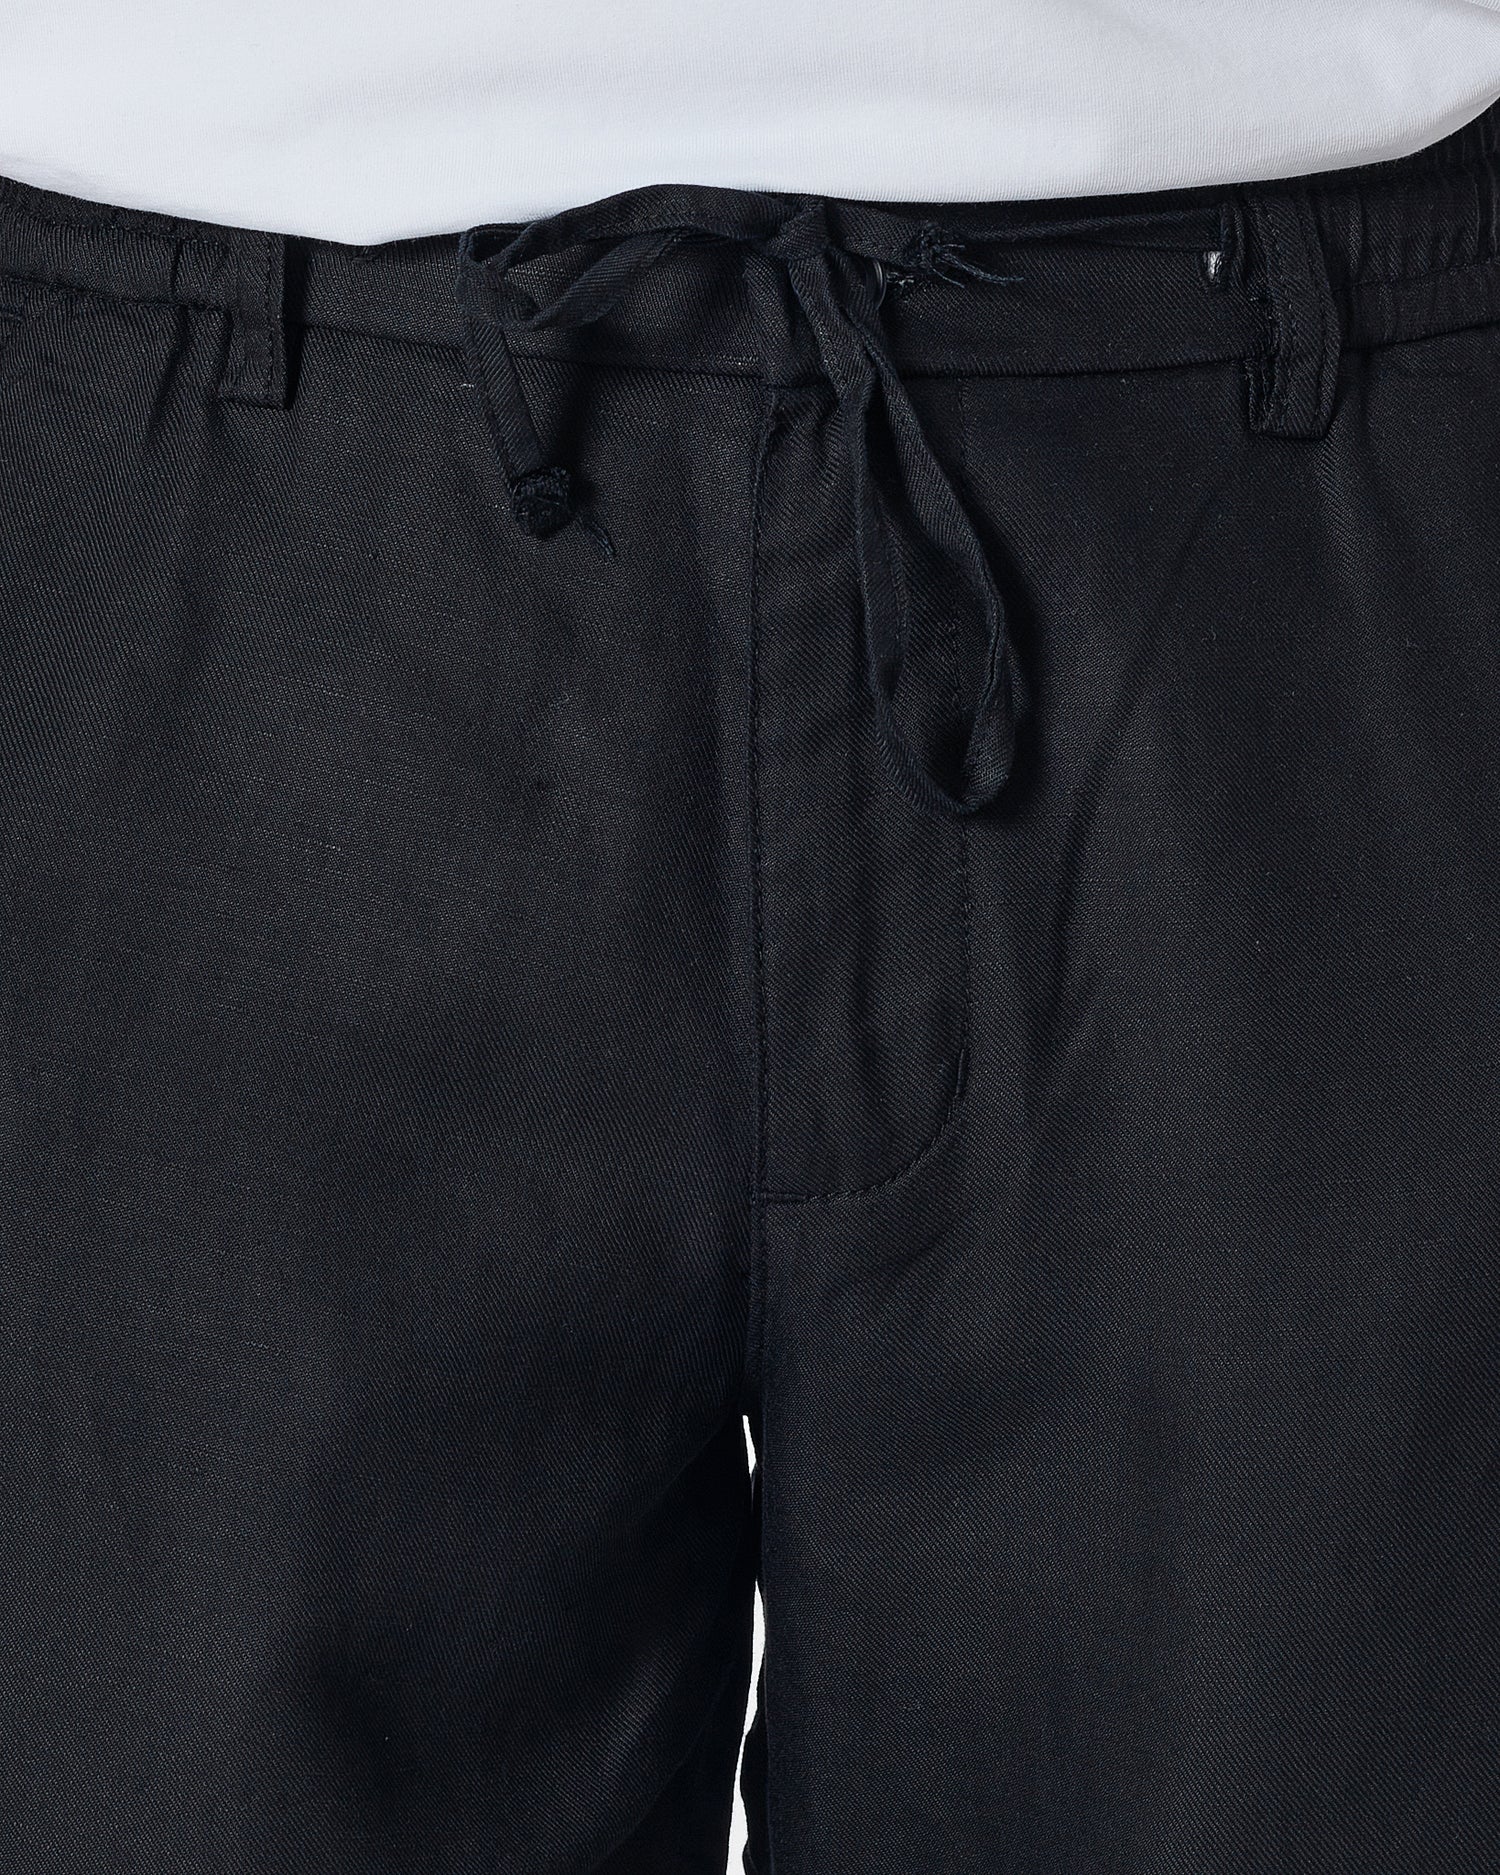 RL Linen Men Black Pants 24.90